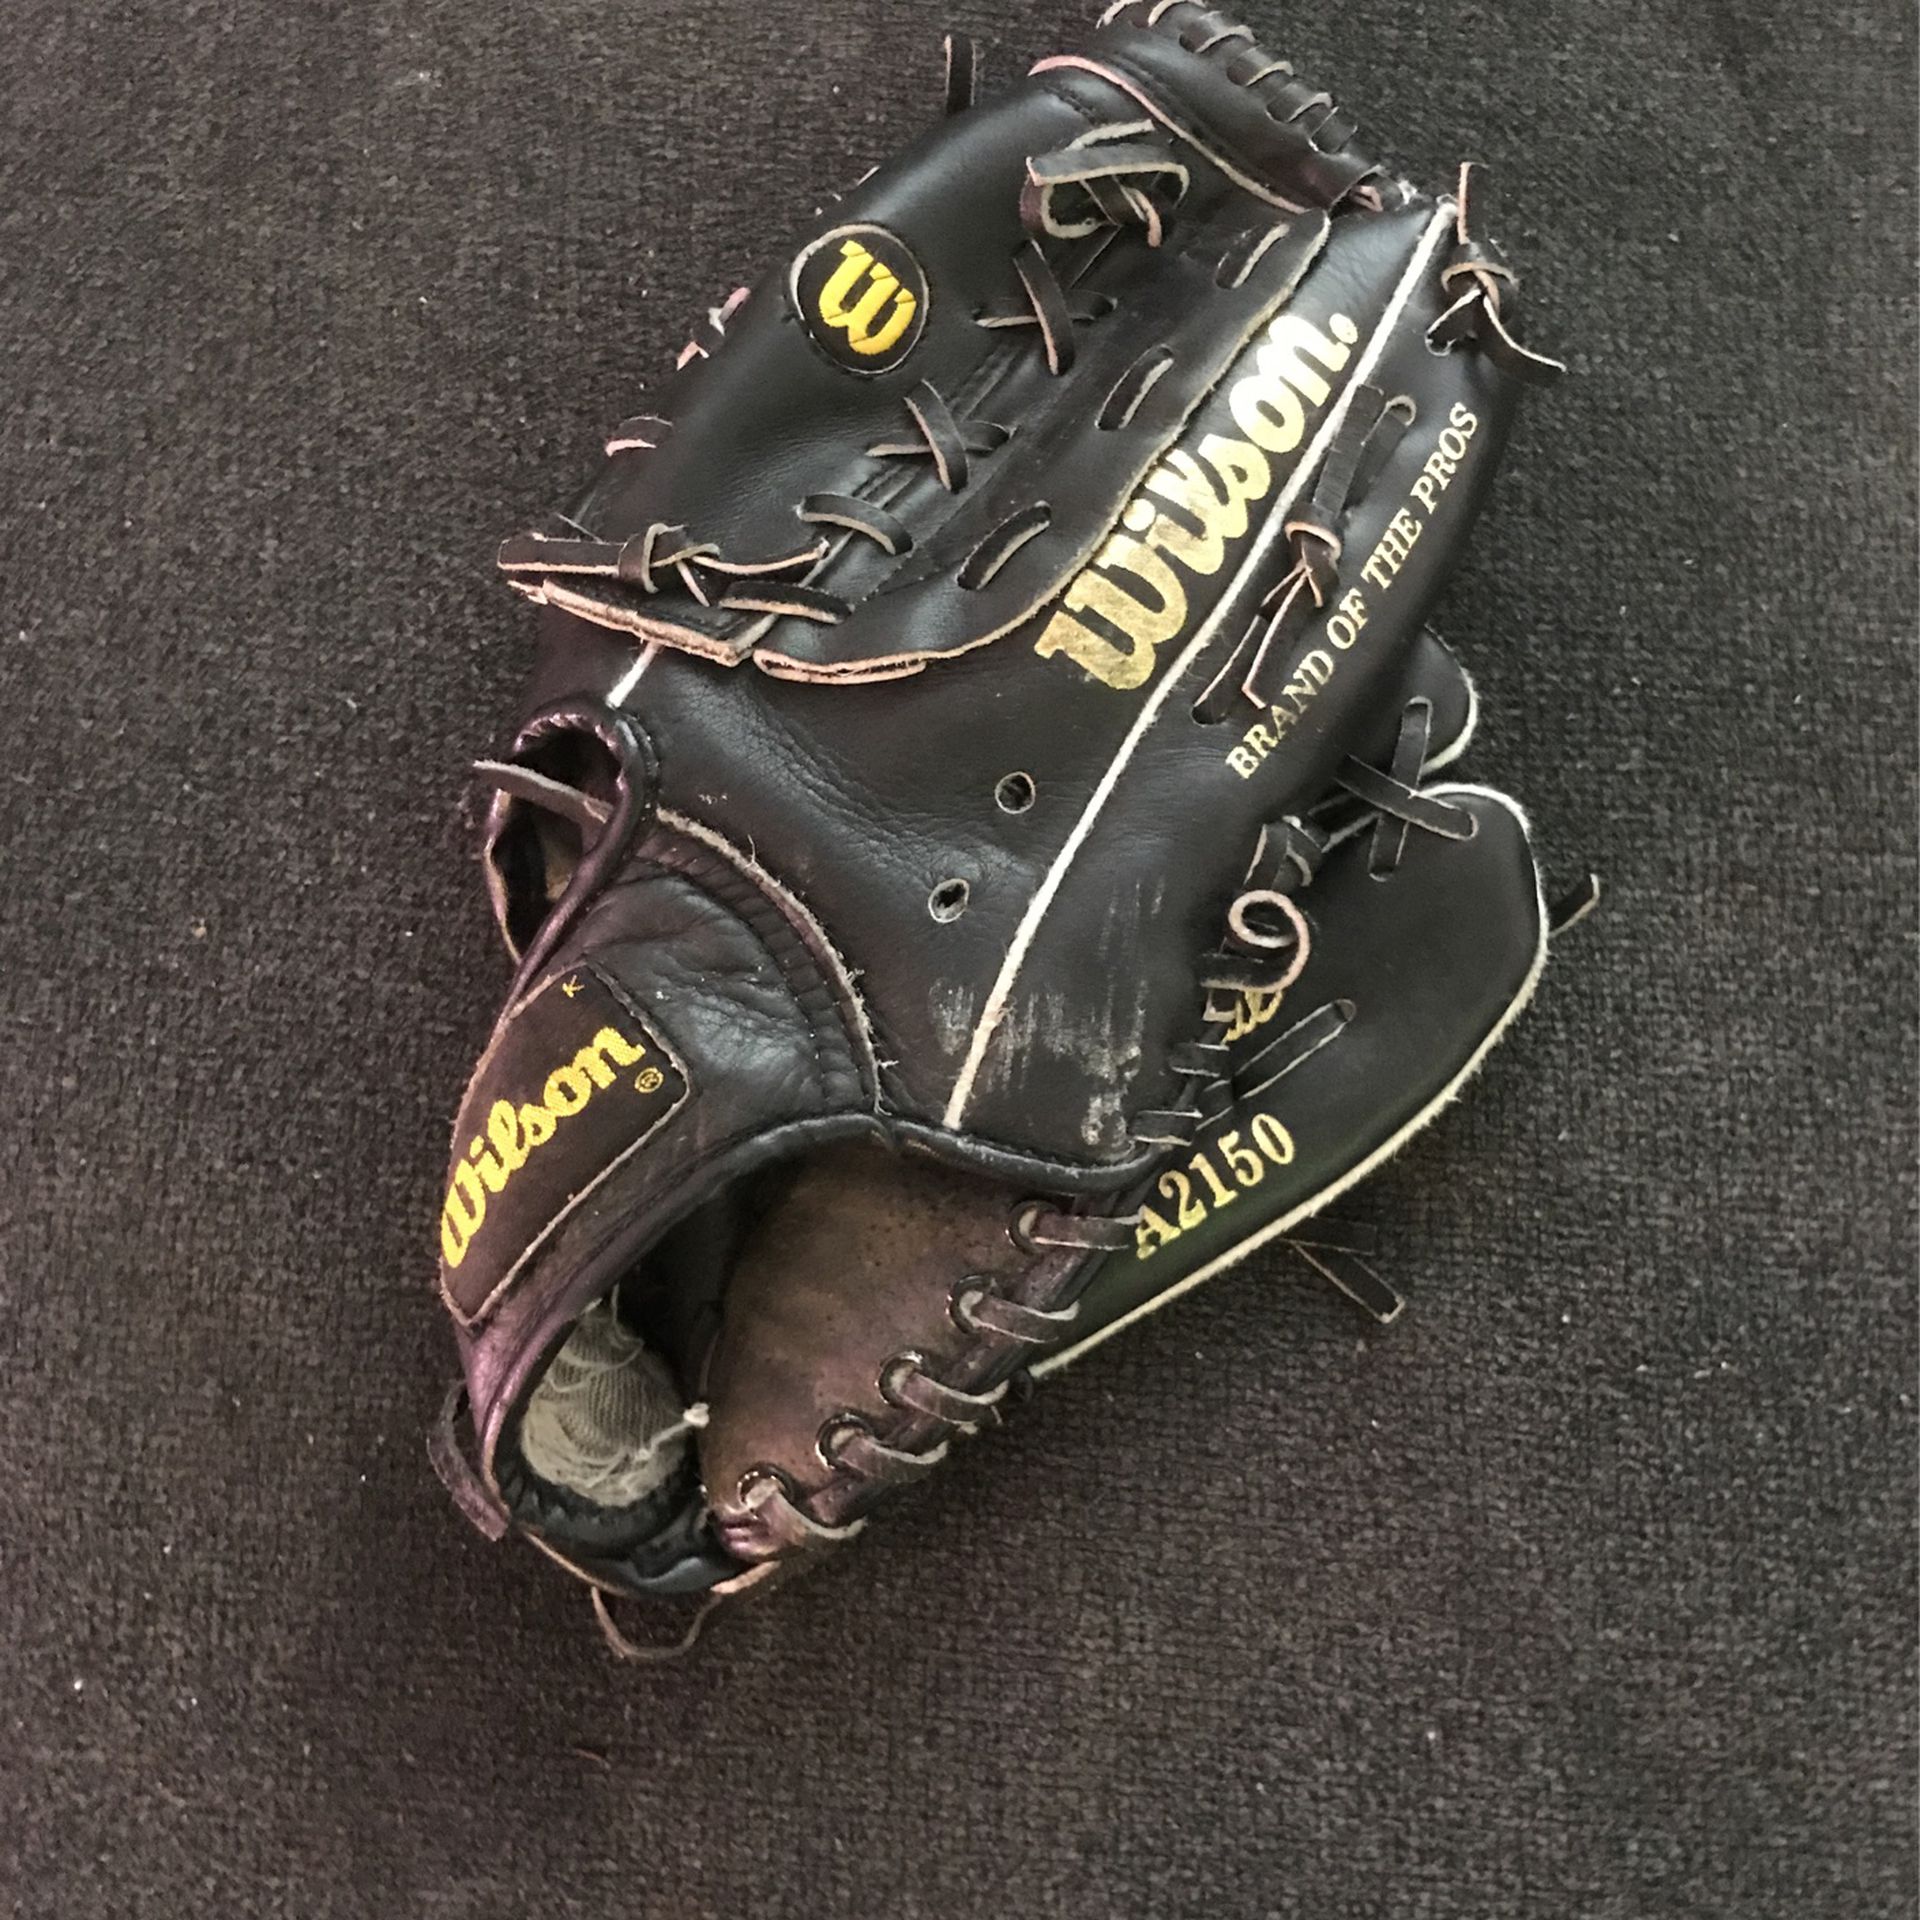 Willsons Baseball Glove